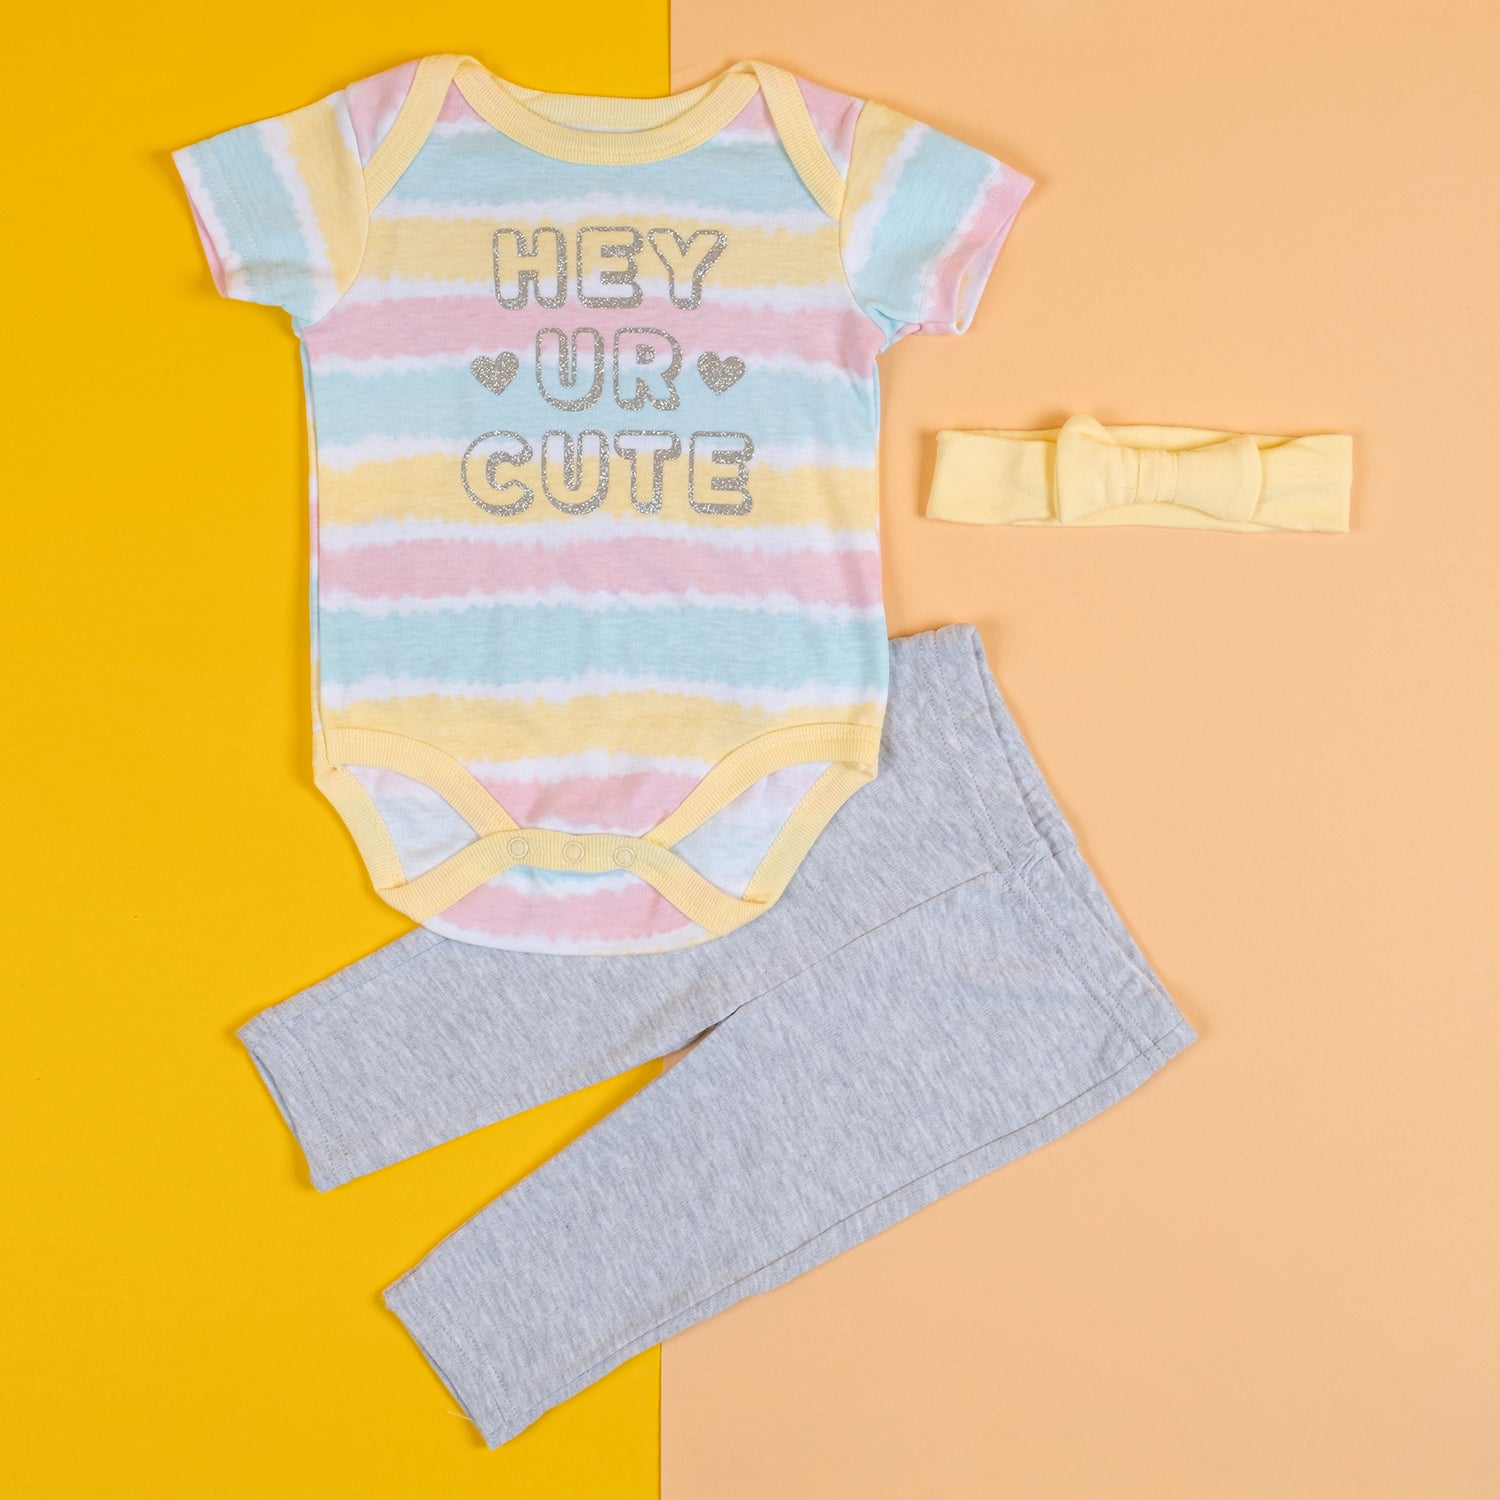 Baby Moo Hey Cutie Gift Set 3 Piece With Bodysuit, Leggings And Headband - Yellow, Grey